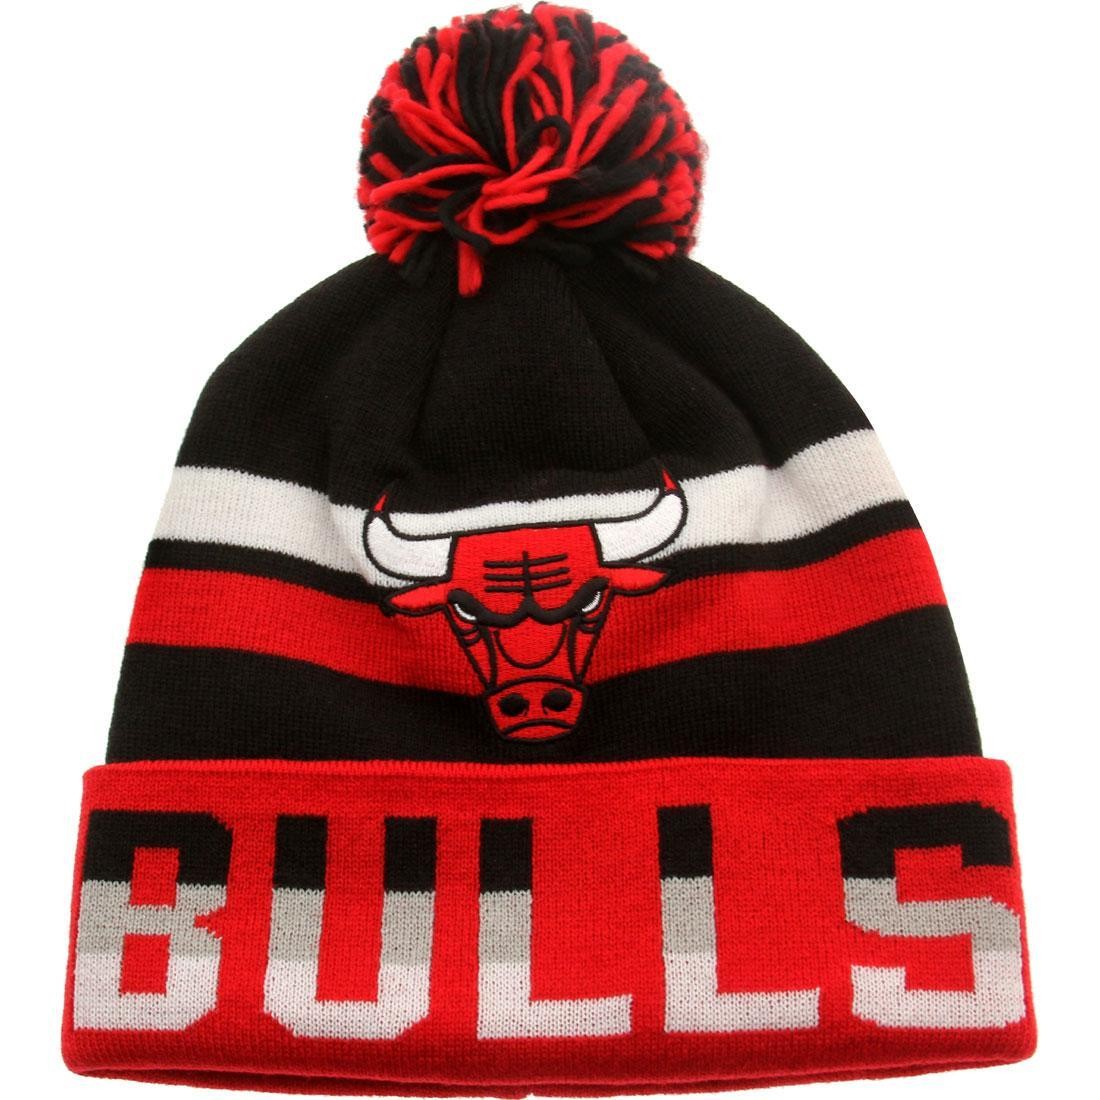 Fandom Knit Bulls Beanie Hat by Mitchell & Ness - 29,95 €